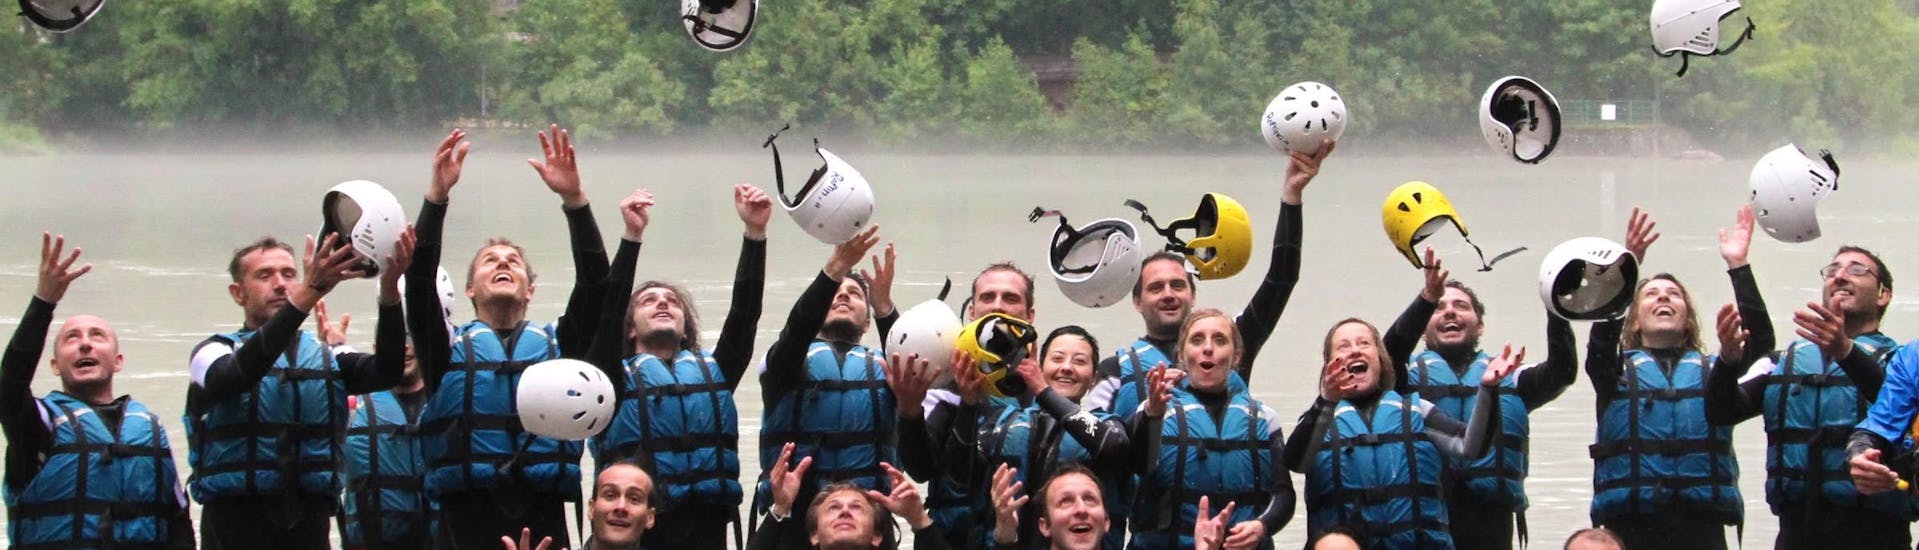 rafting-easy-on-the-dora-baltea-for-groups-from-10-people-raftingit-hero 